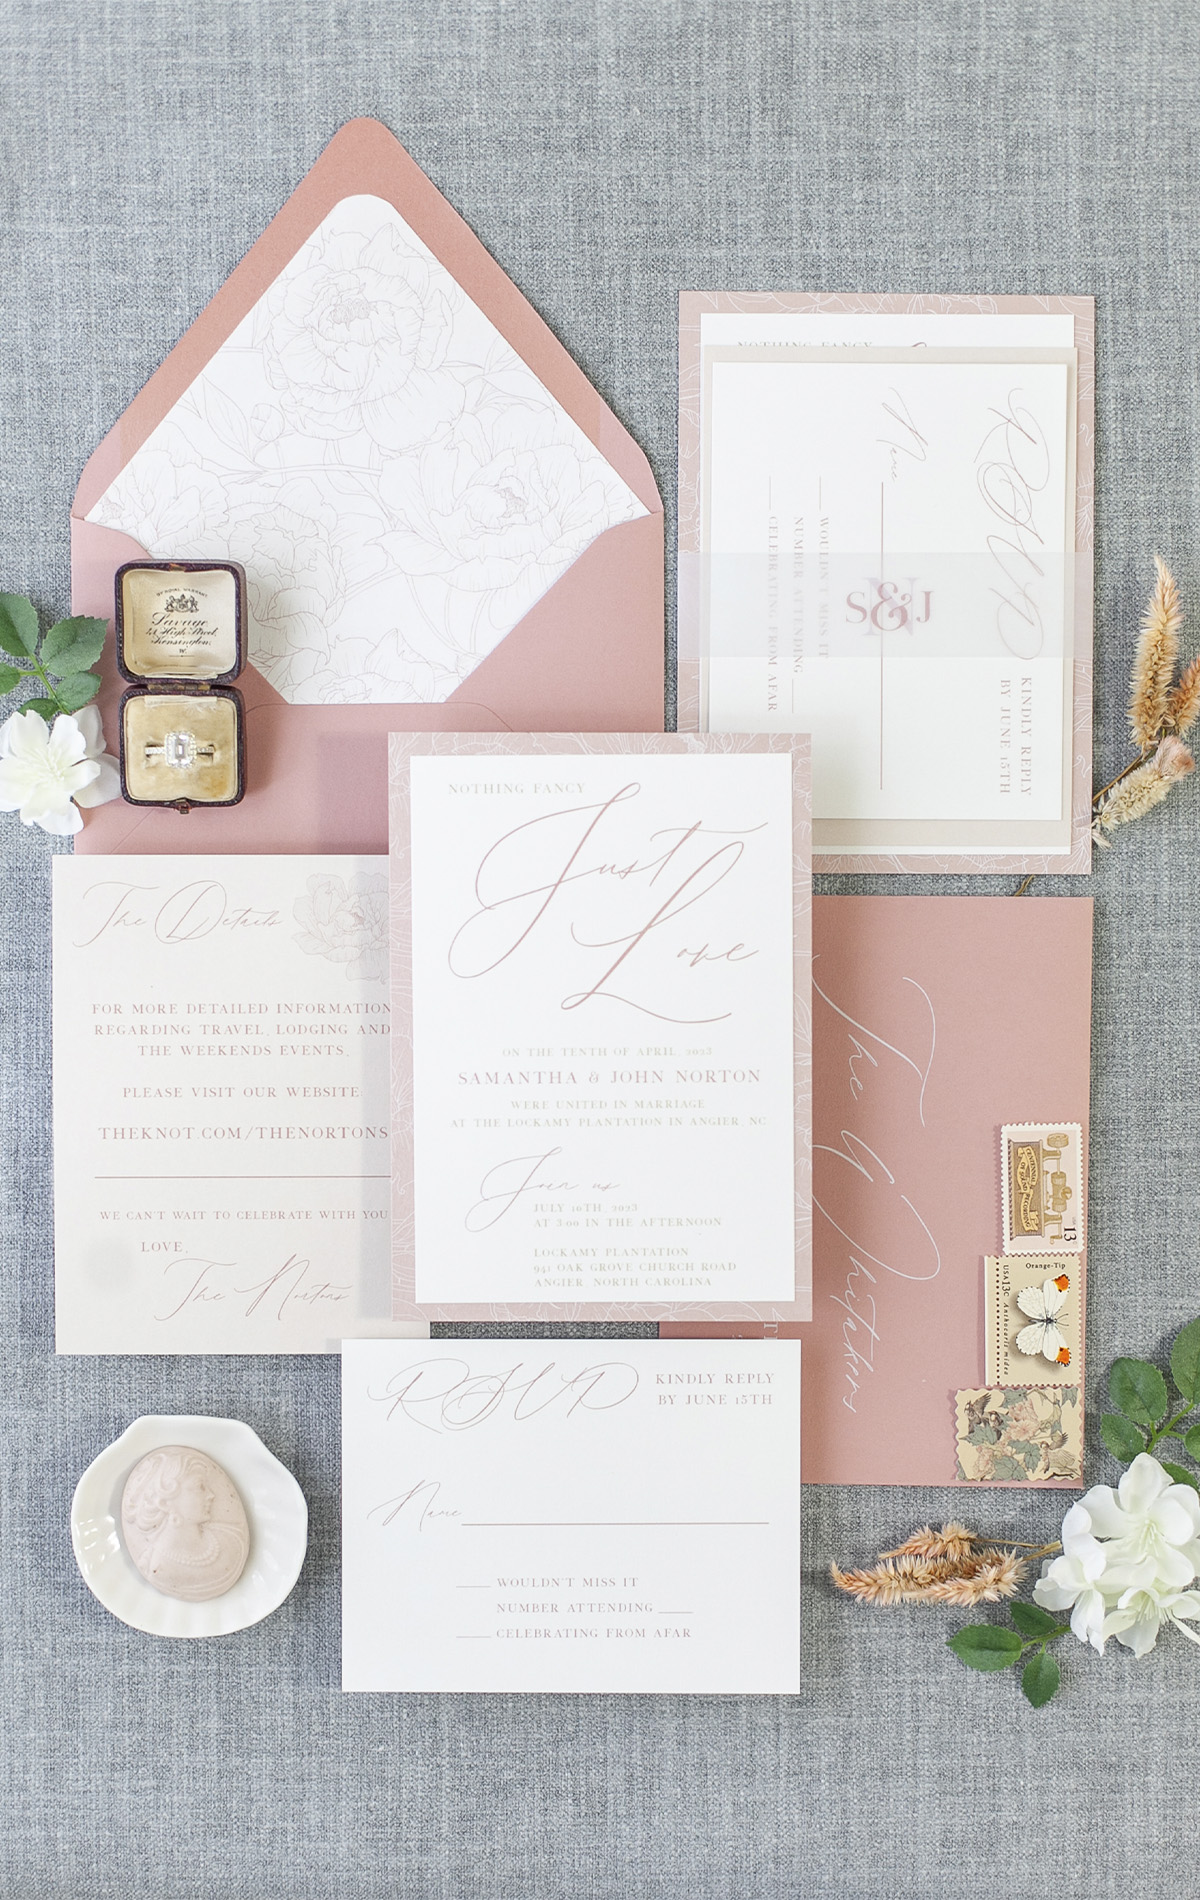 Alexis Scott - Home Website Slider Image - Light pink and blush floral wedding invitations